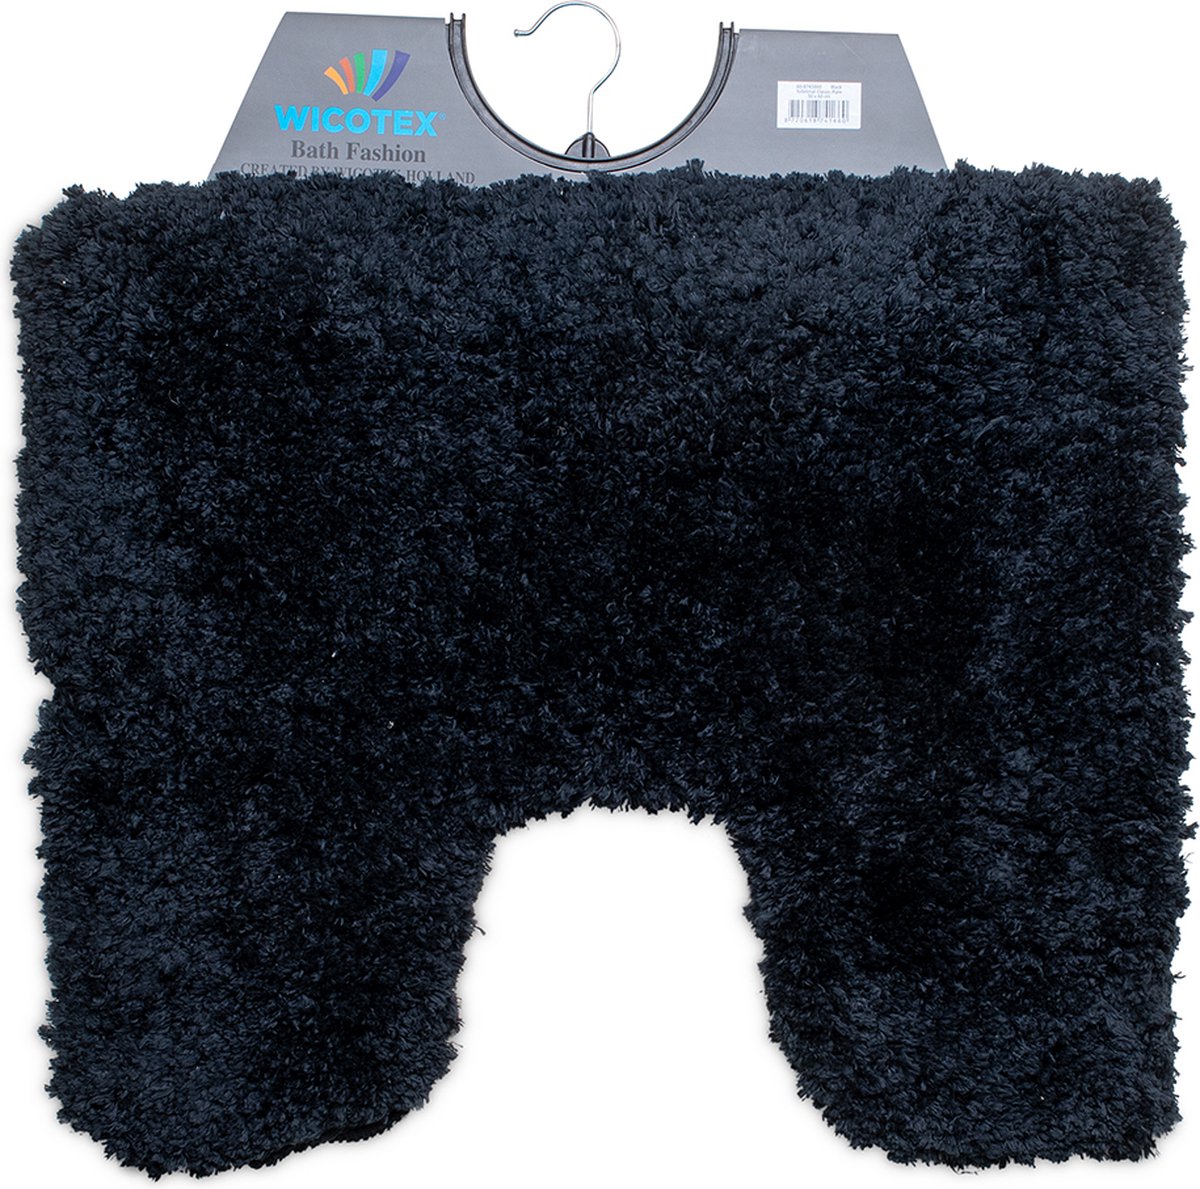 Wicotex - Toiletmat Classic pure Zwart - Antislip onderkant - WC mat met uitsparing - Afmeting 50x60cm - Wicotex